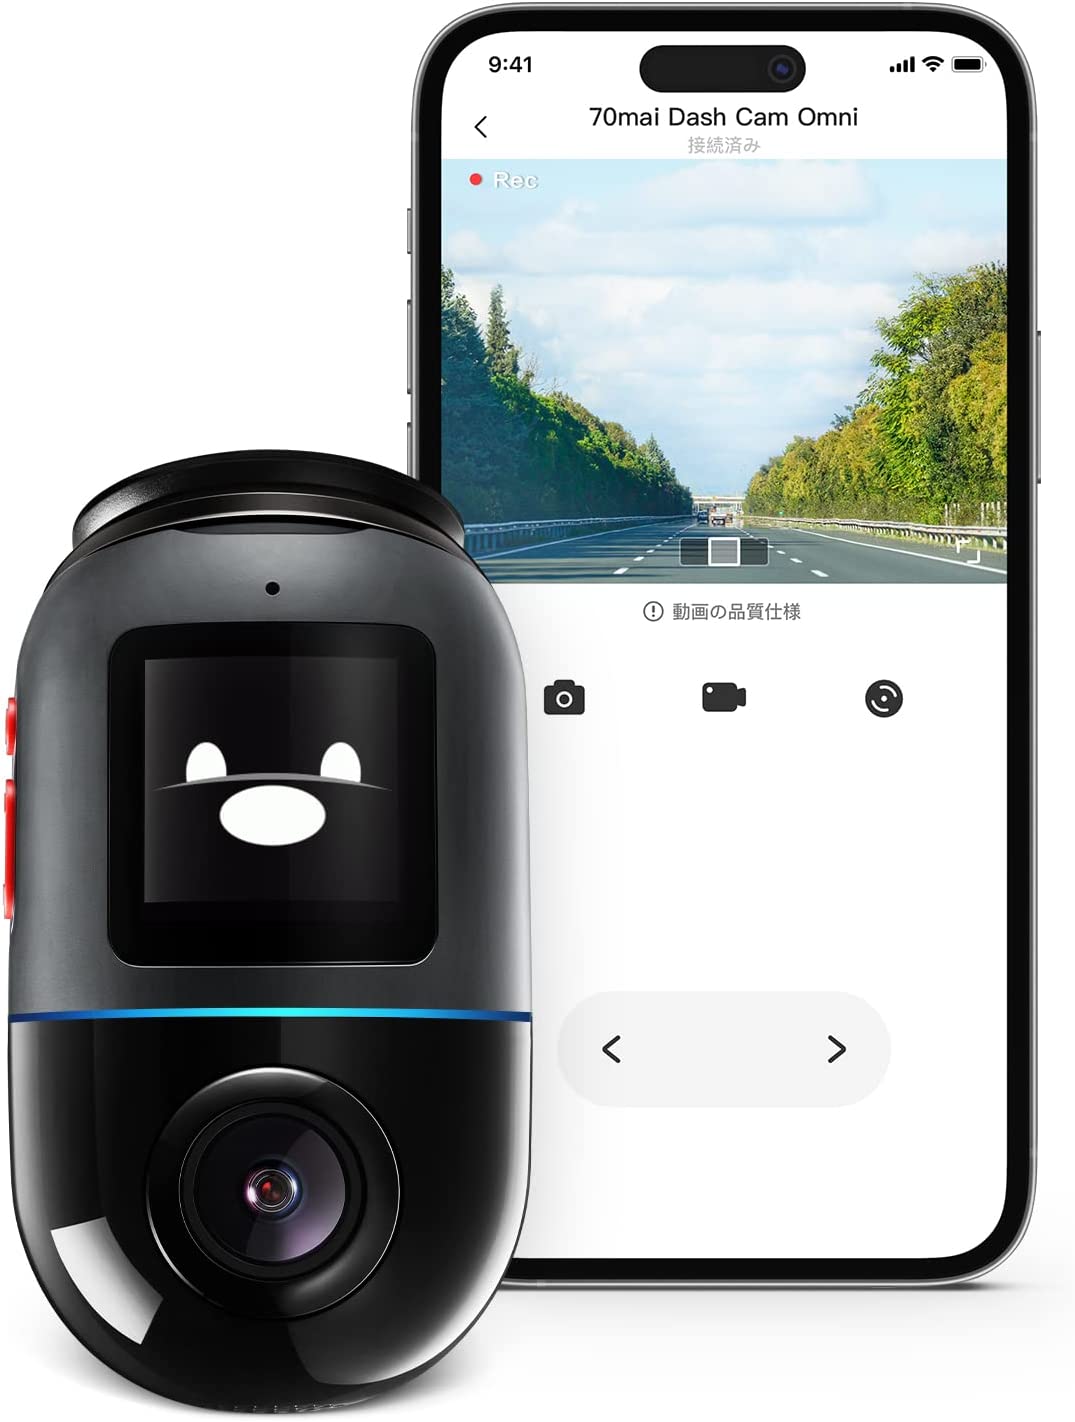 70mai Dash Cam Omni 前後左右360度撮影対応ドライブレコーダー eMMCストレージ SDカード不要 車用ドラレコ 小型 200万画素 HDR 安全運転支援機能搭載 GPS内蔵 Wi-Fi Bluetooth搭載 APP連動 LED信号機対応 ノイズ対策済 電子日本語取扱書 TELEC認証 MIC認証済  (128GB)